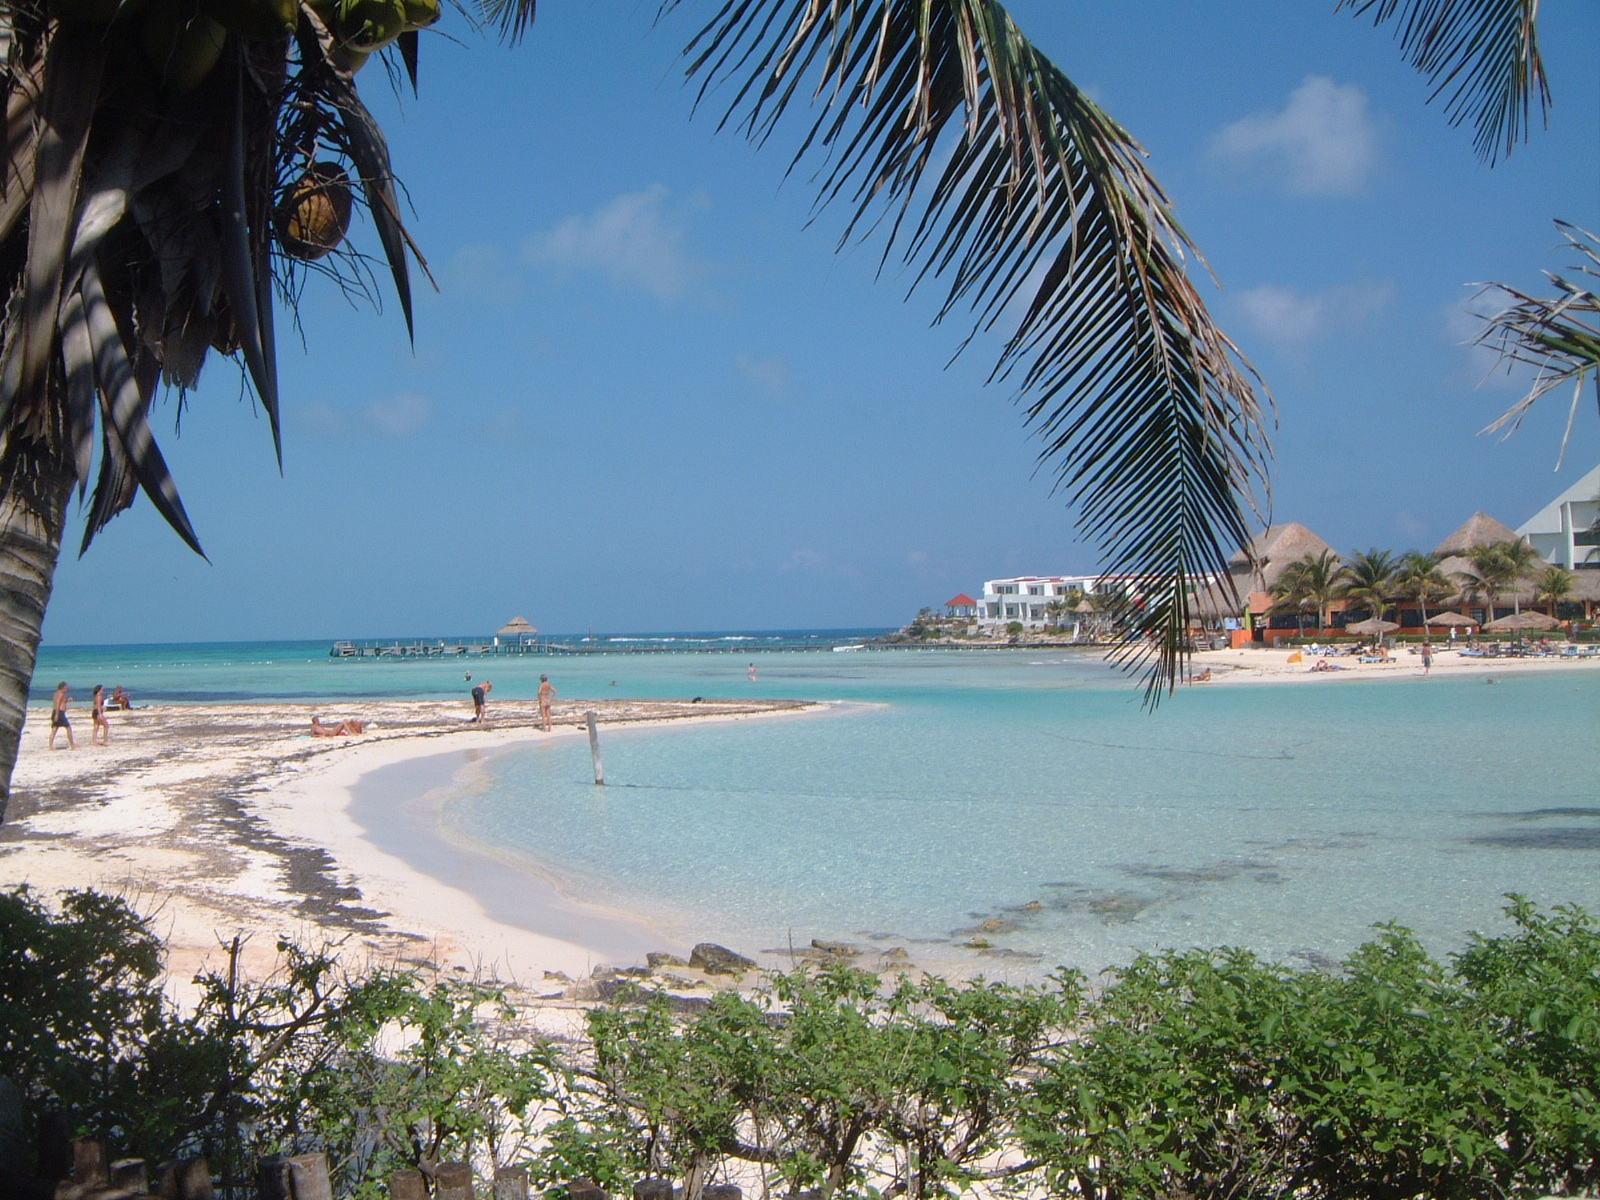 Playa Norte on Isla Mujeres, Mexico